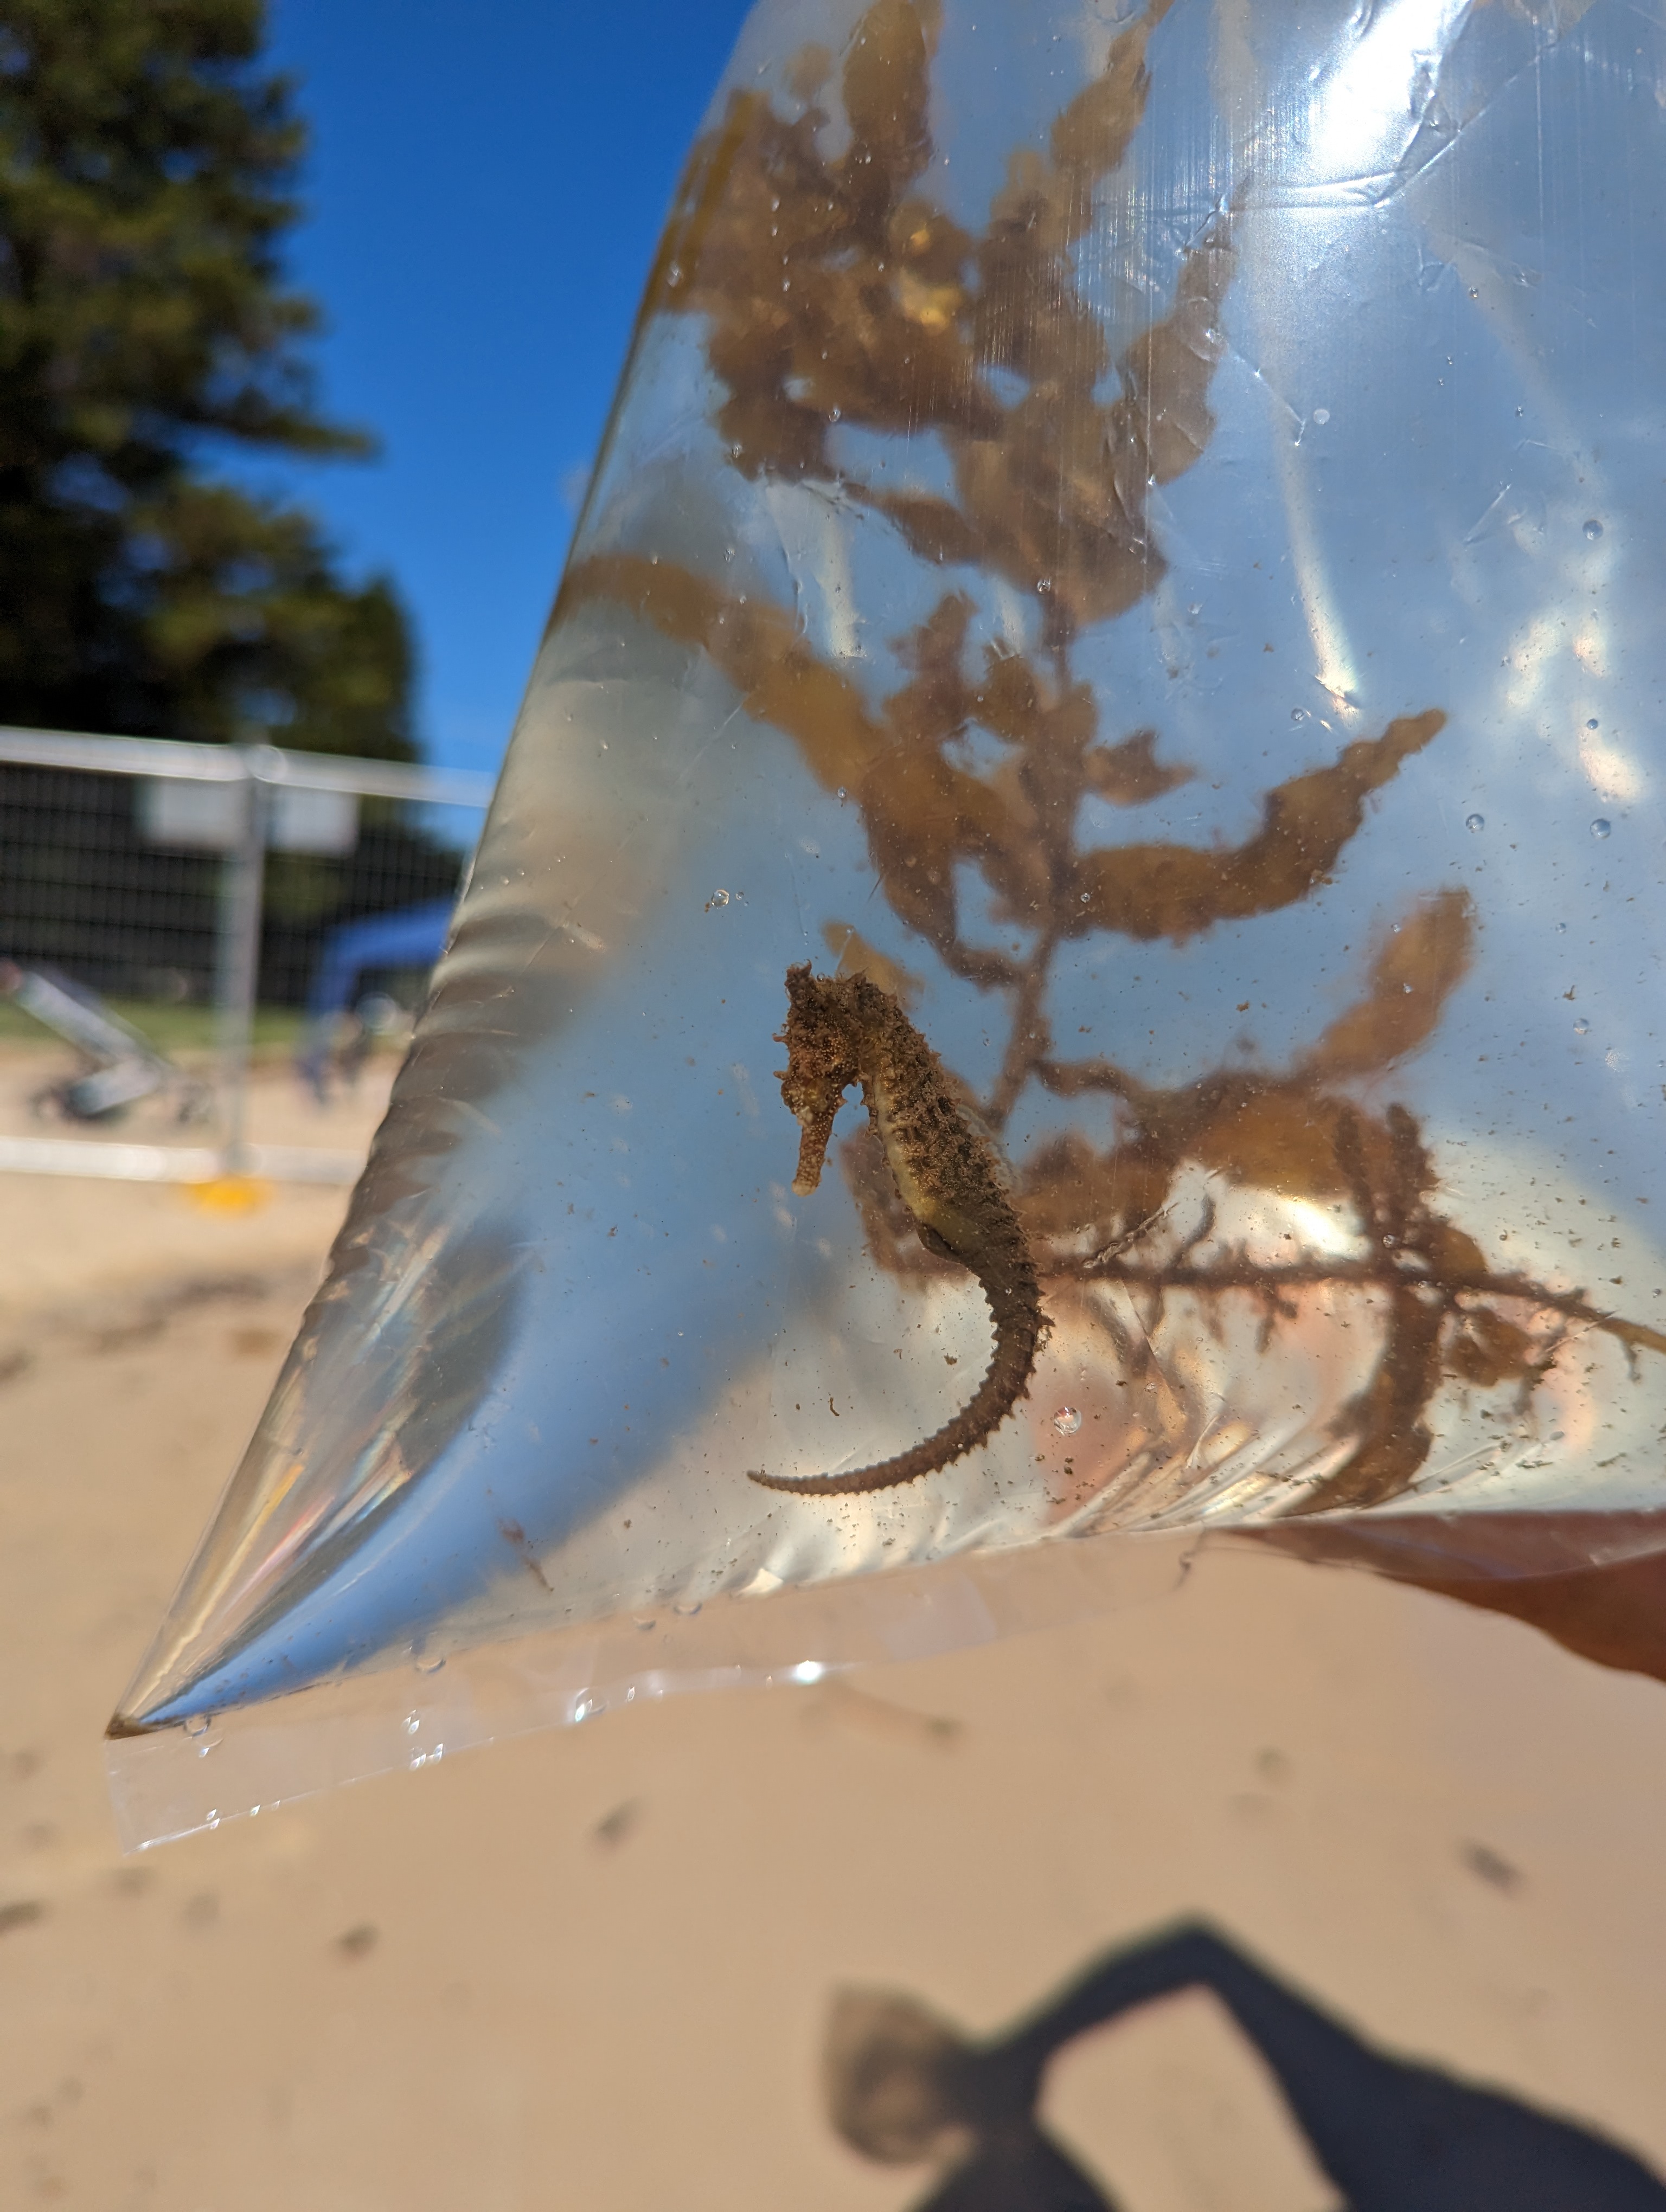 A seahorse in a plastic bag on a beach